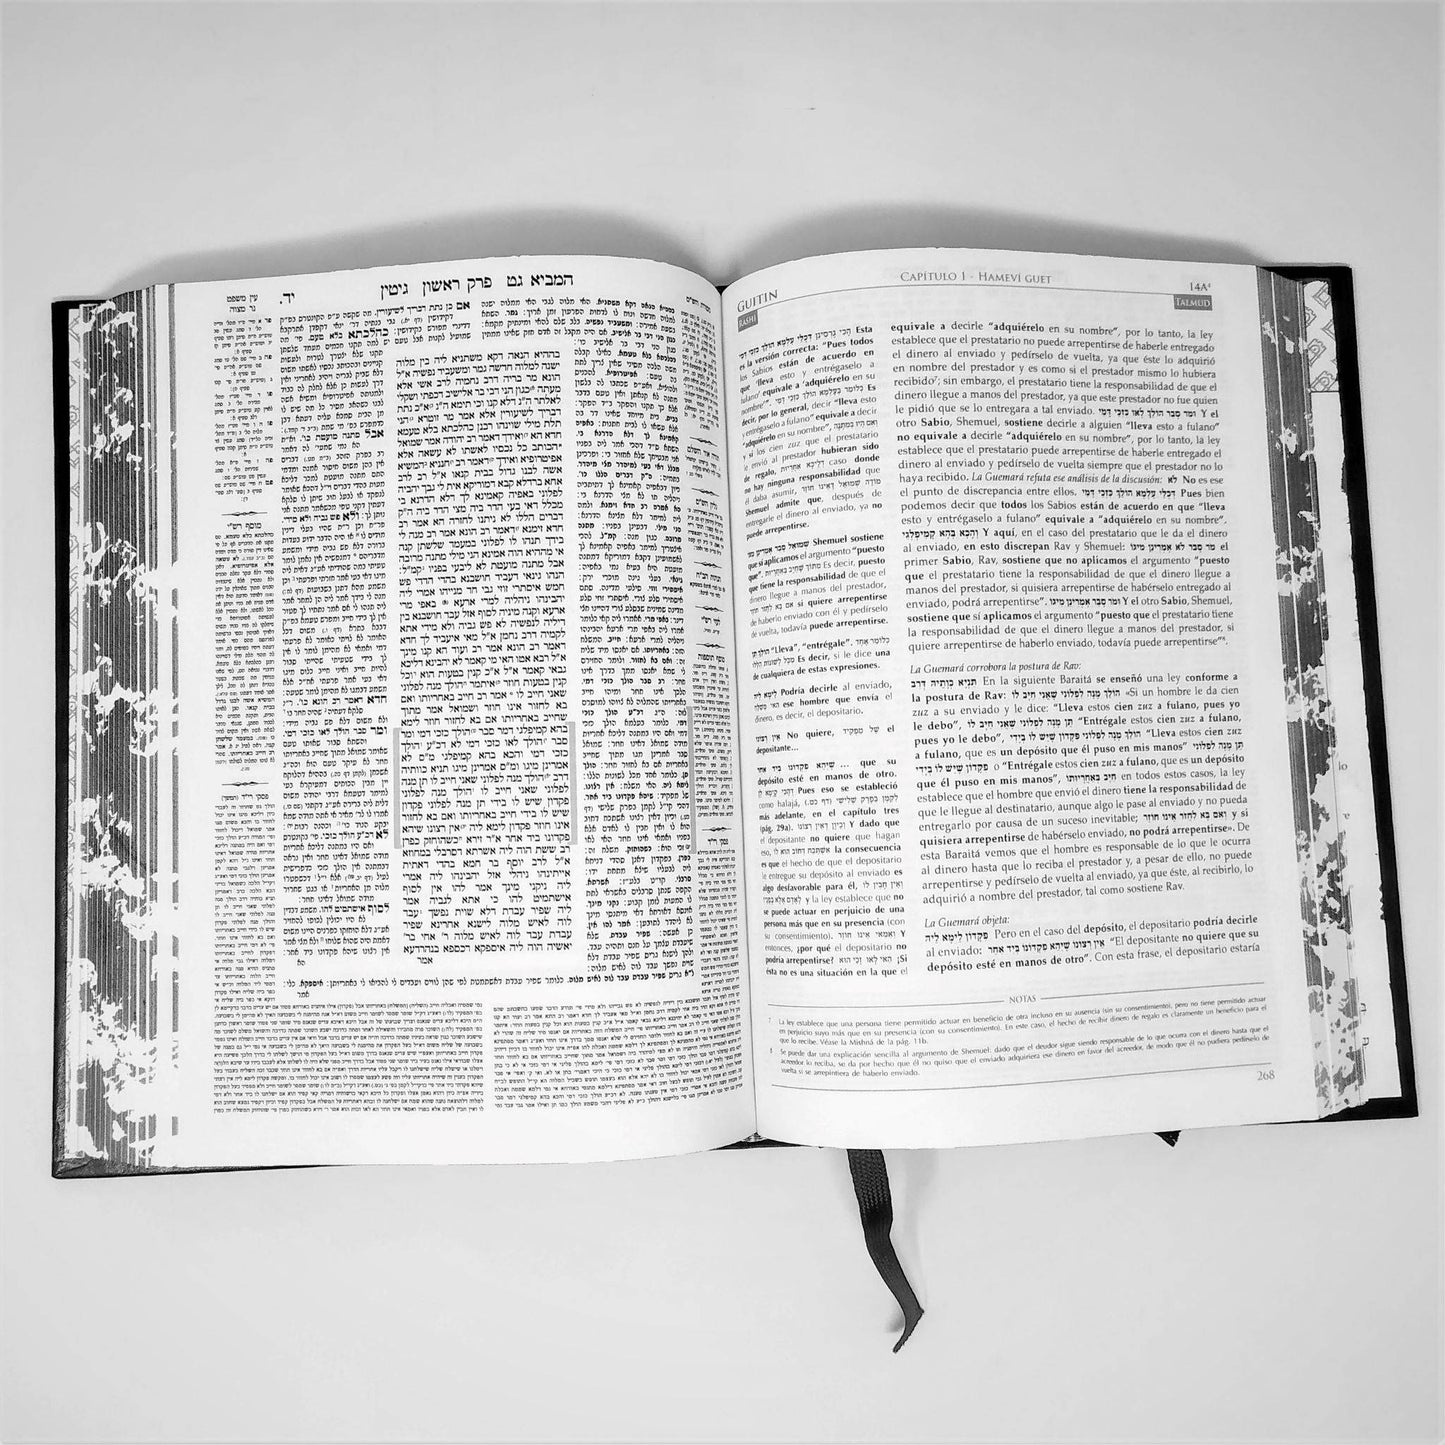 Talmud Tashema Guitin Tomo 1, mediano - Libreria Jerusalem Centro